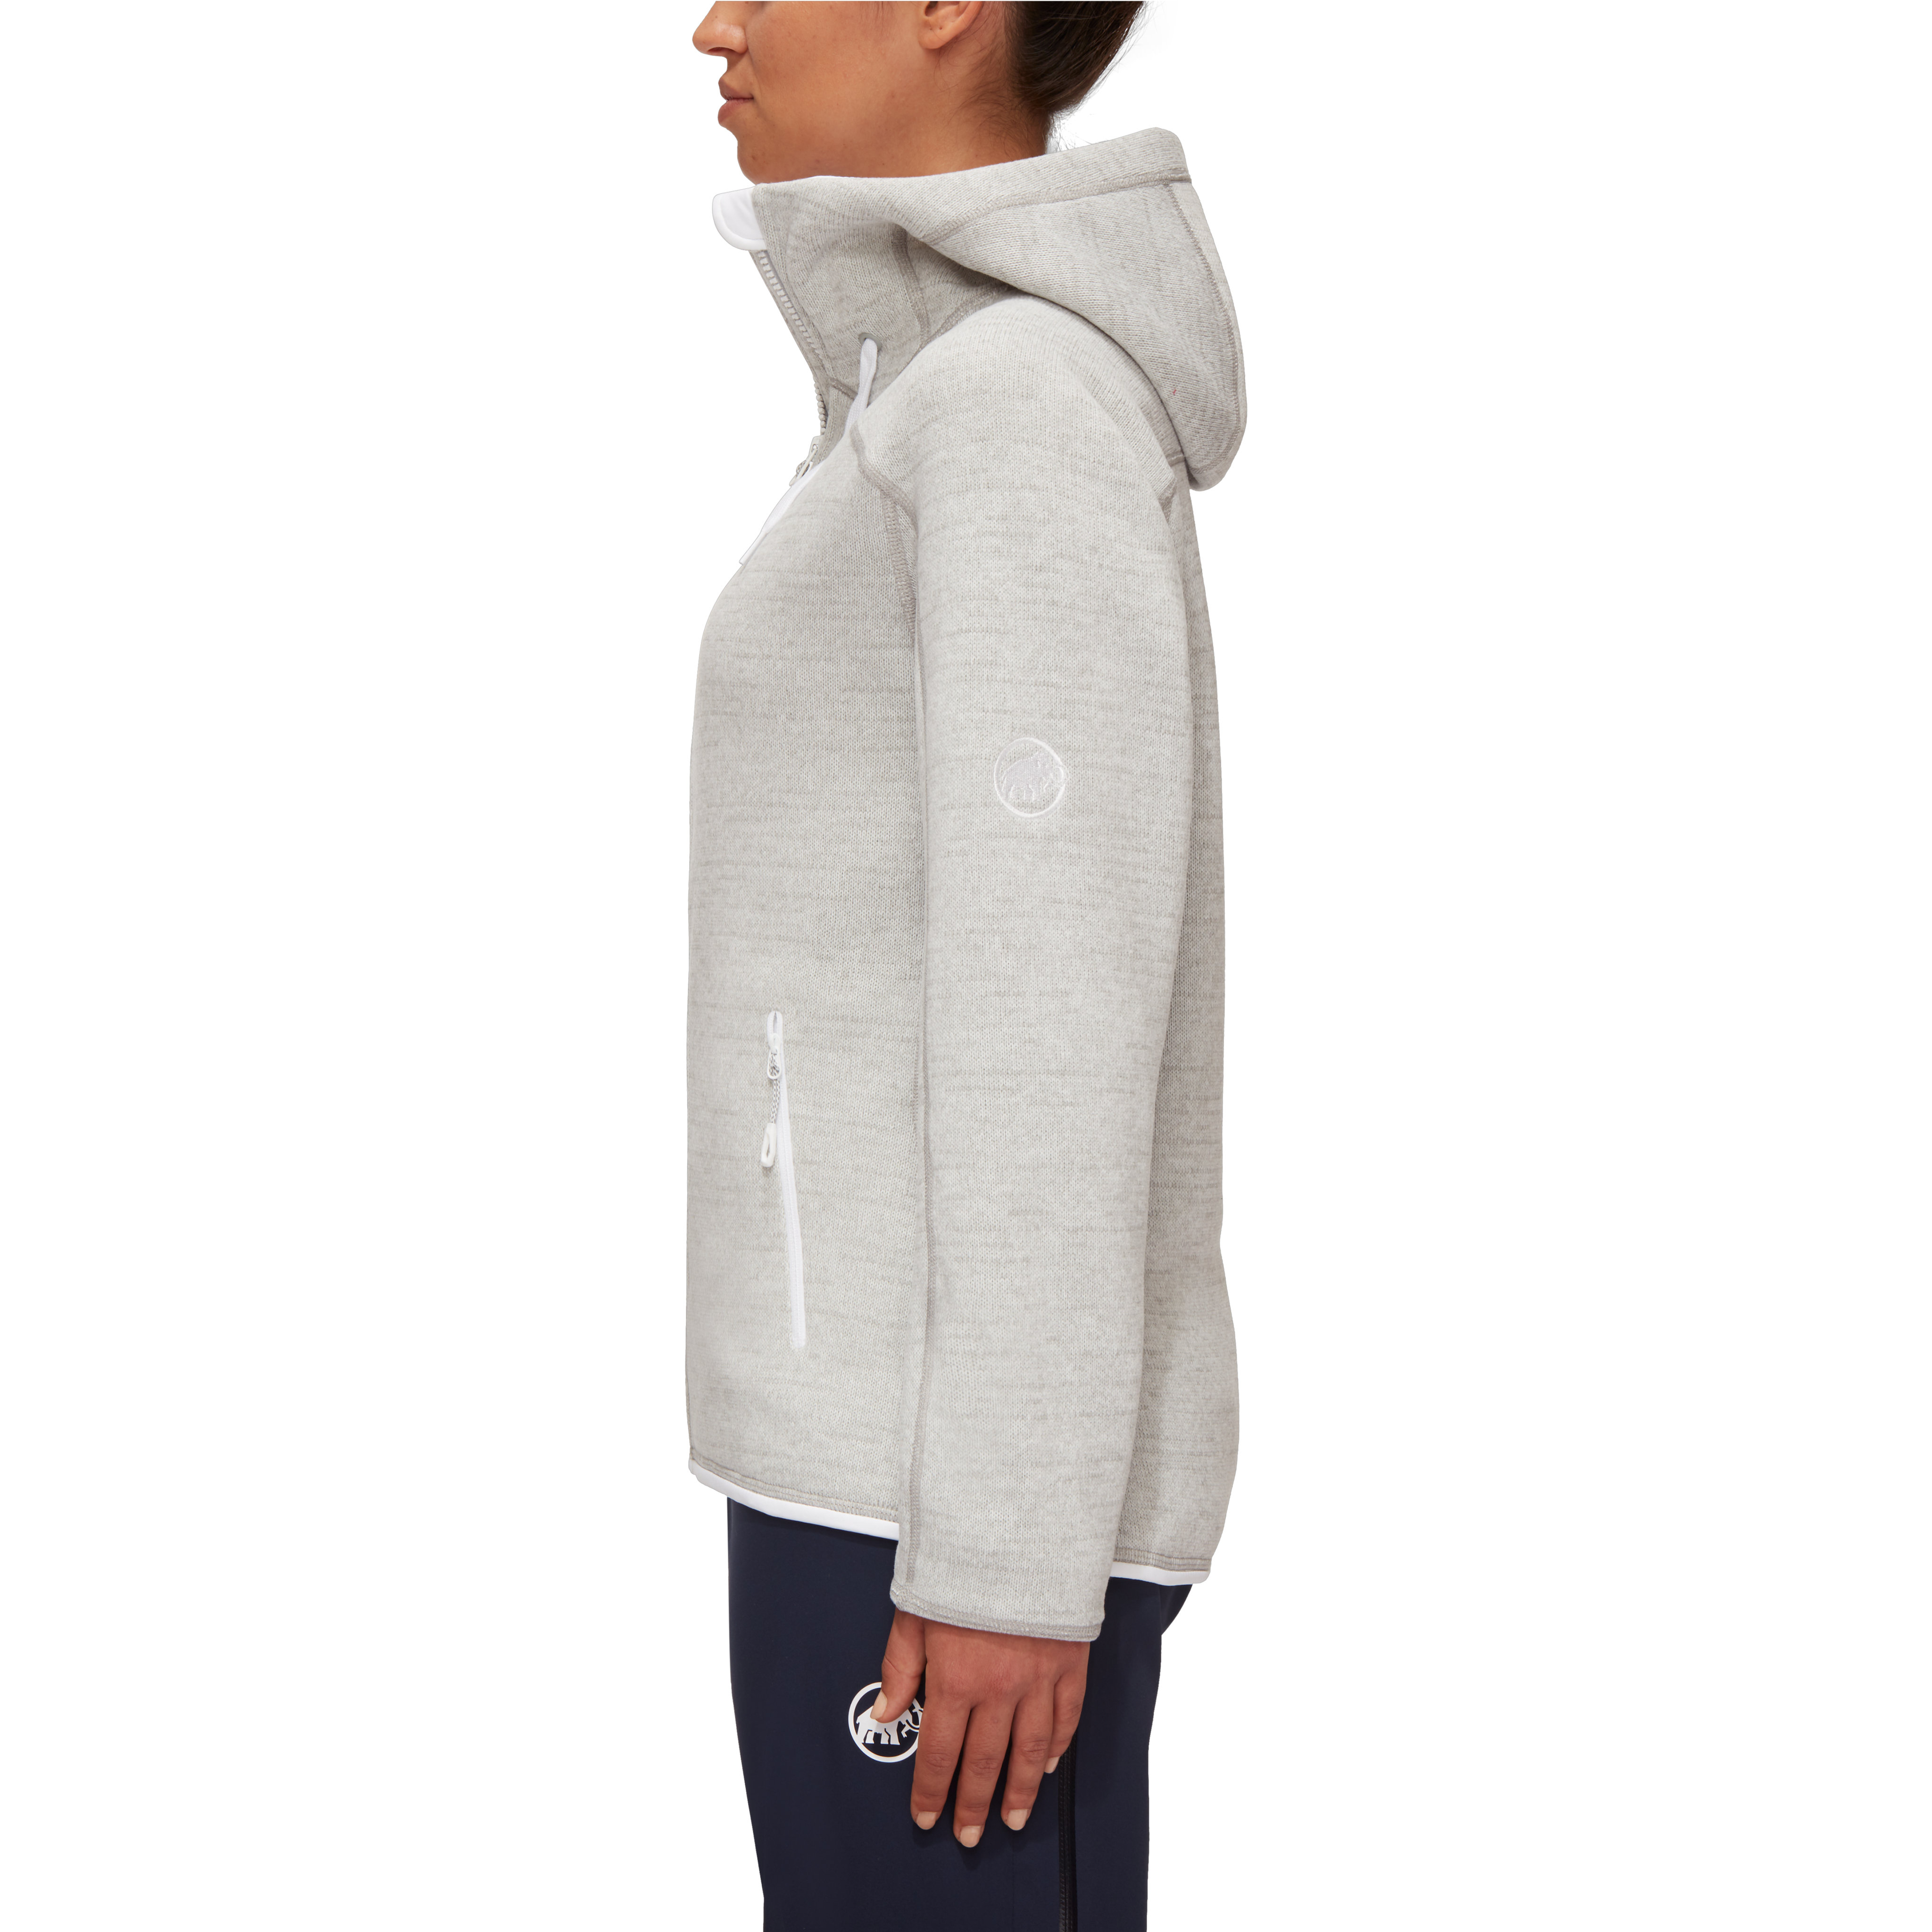 Arctic ML Hooded Jacket Women product image